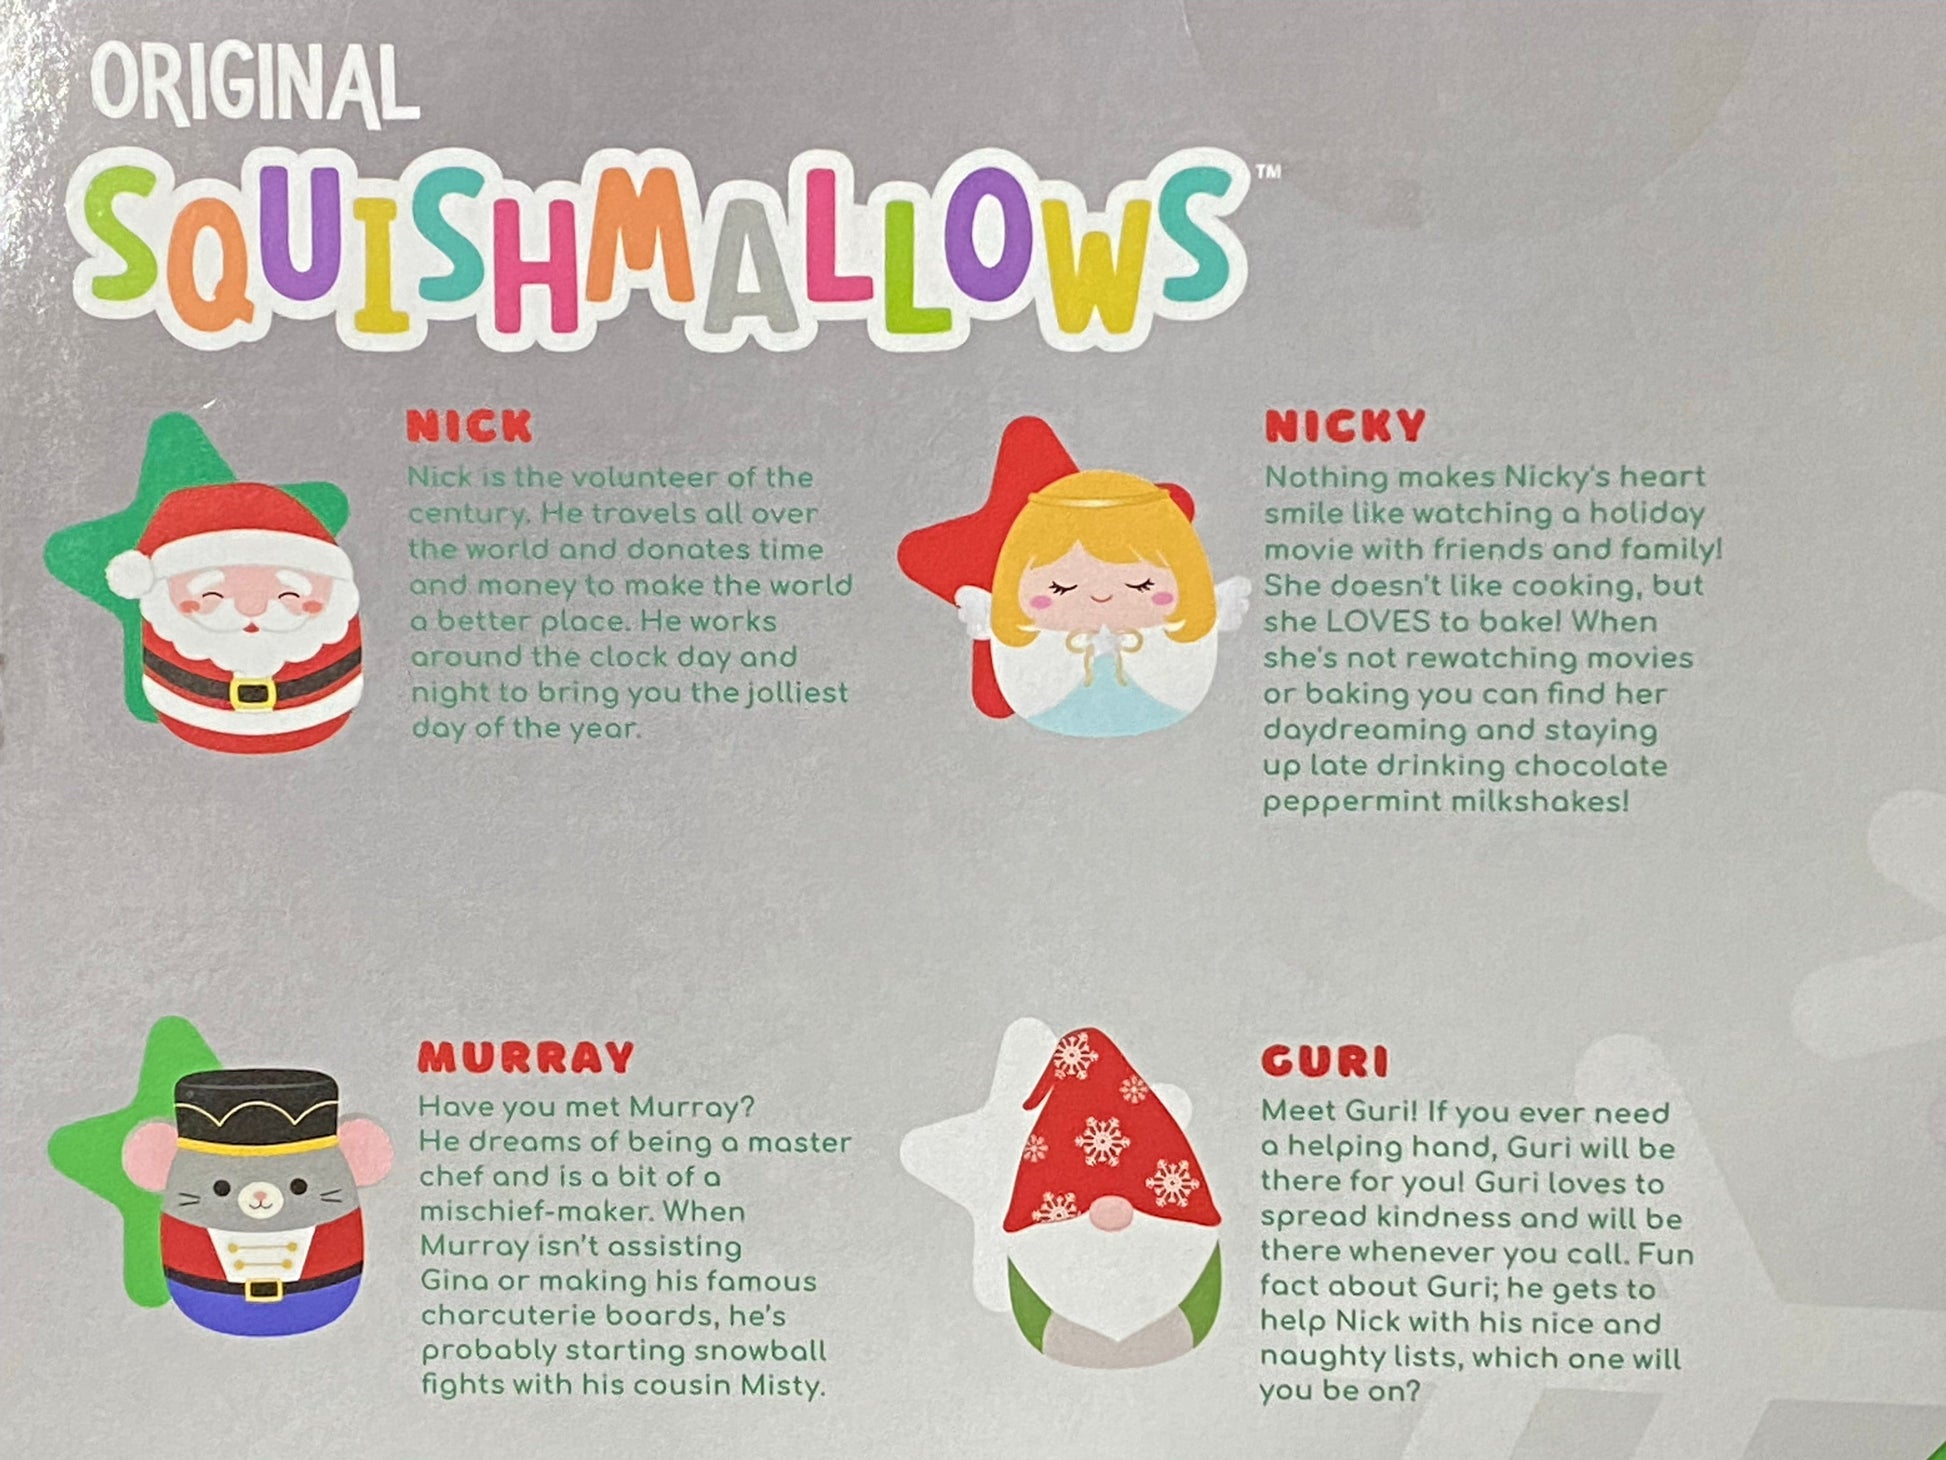 Squishmallow 4” Special Edition Ornament SET